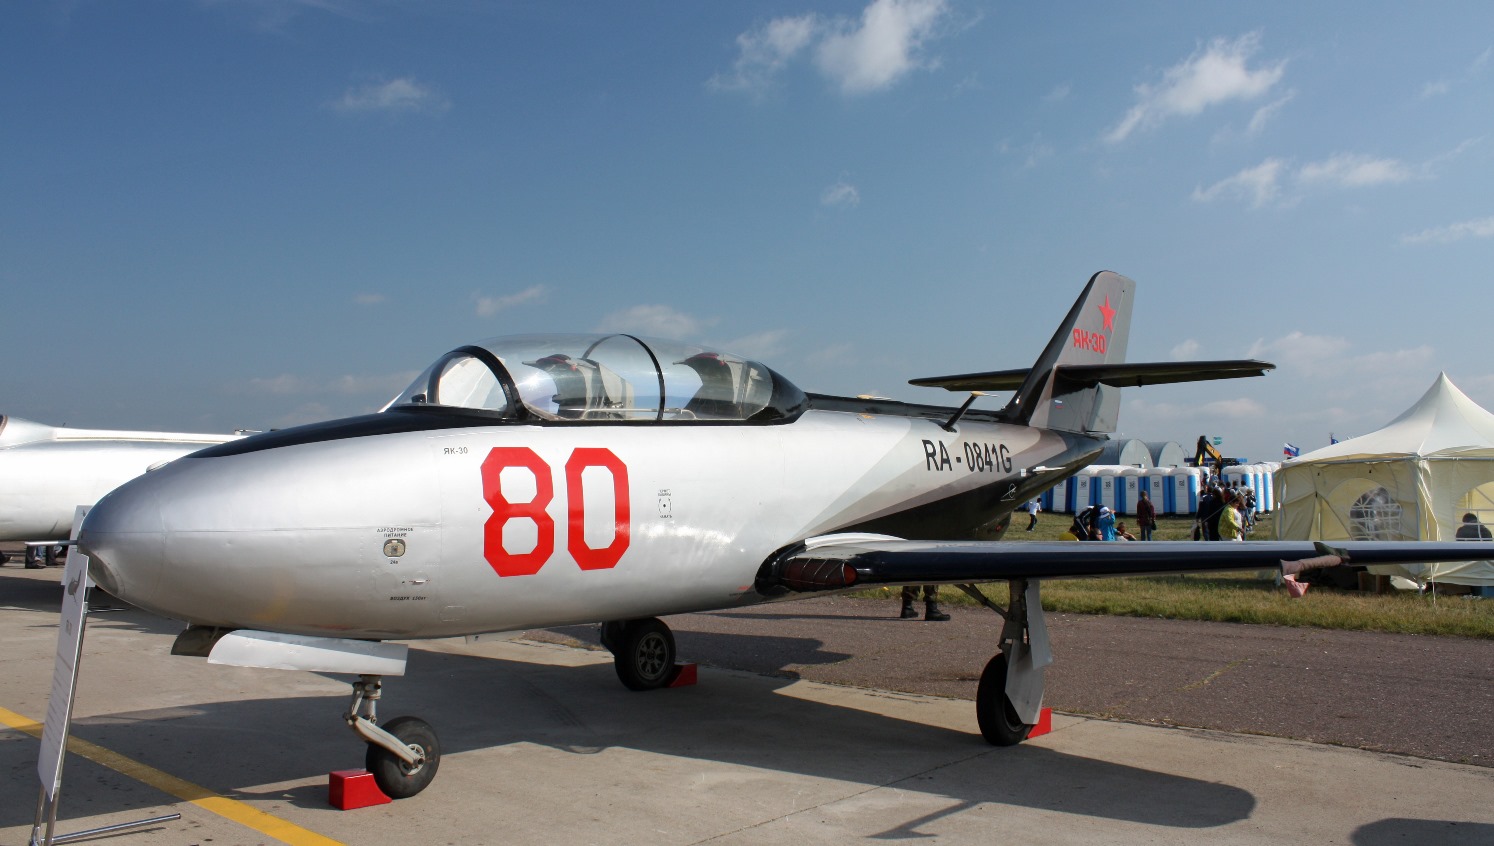 Yak-30 (USSR)